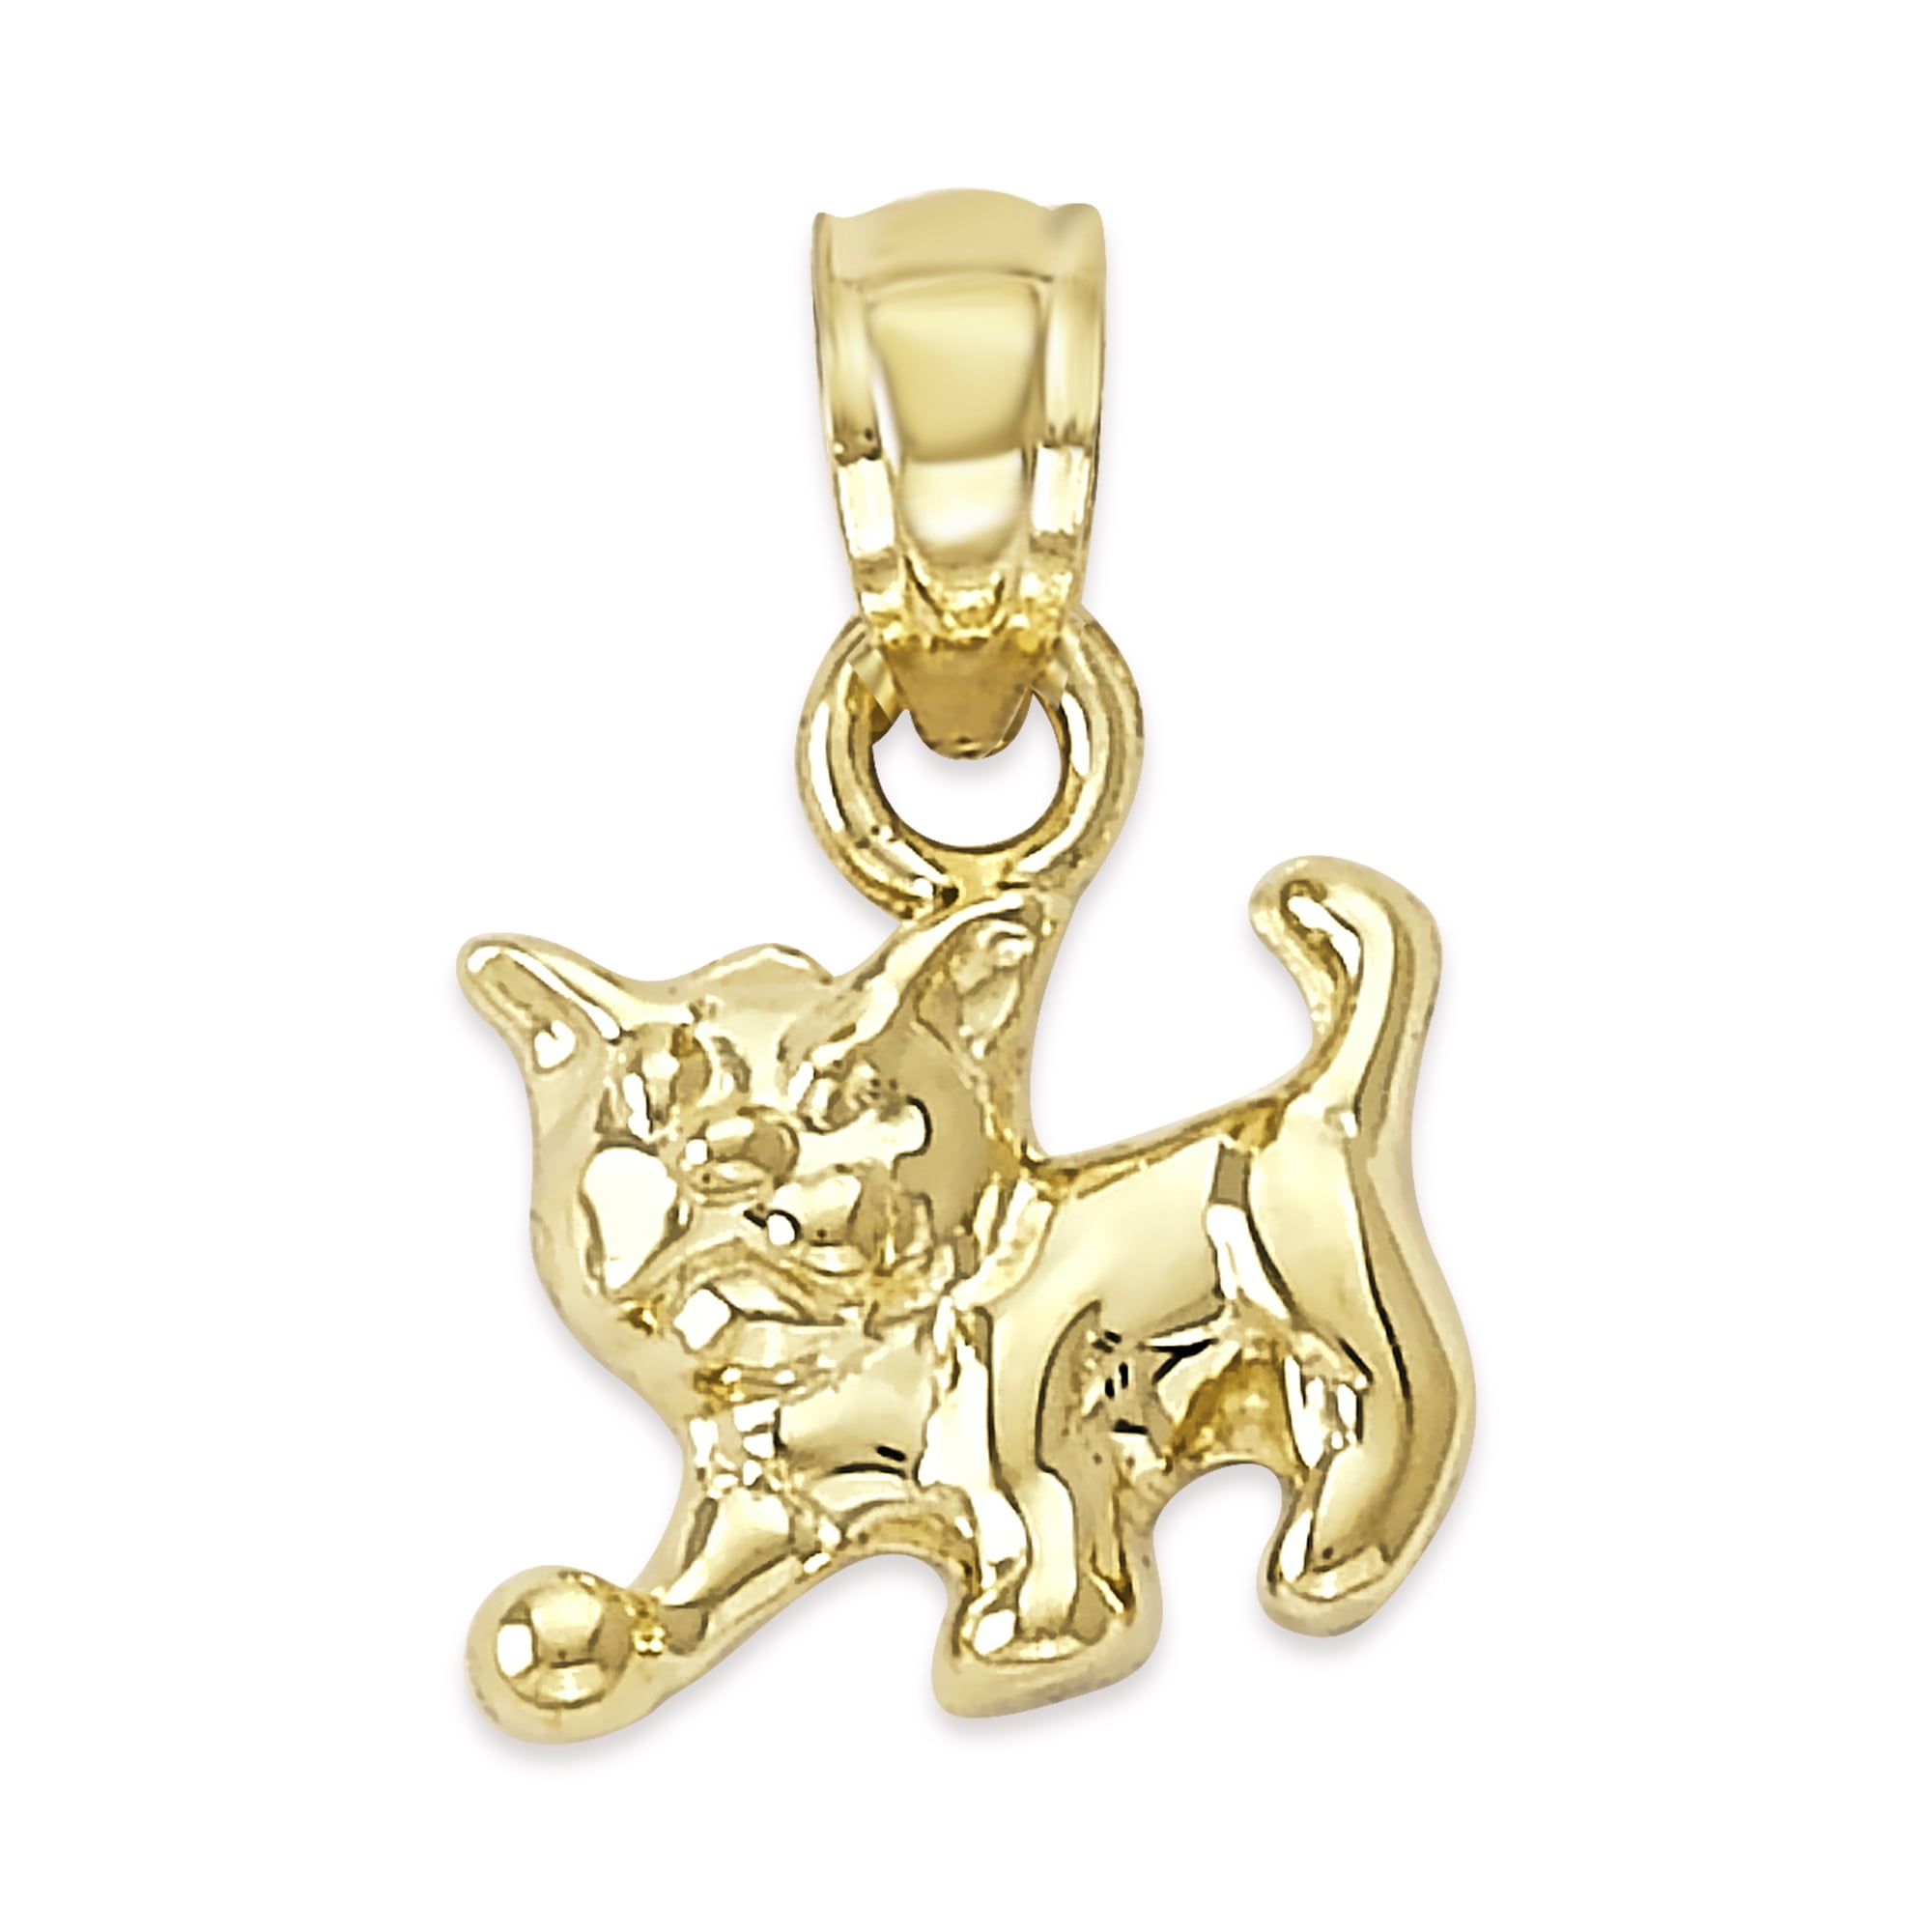 1 pc Tiny 5.5mm 14K Yellow Gold Puppy Dog Charm pendant